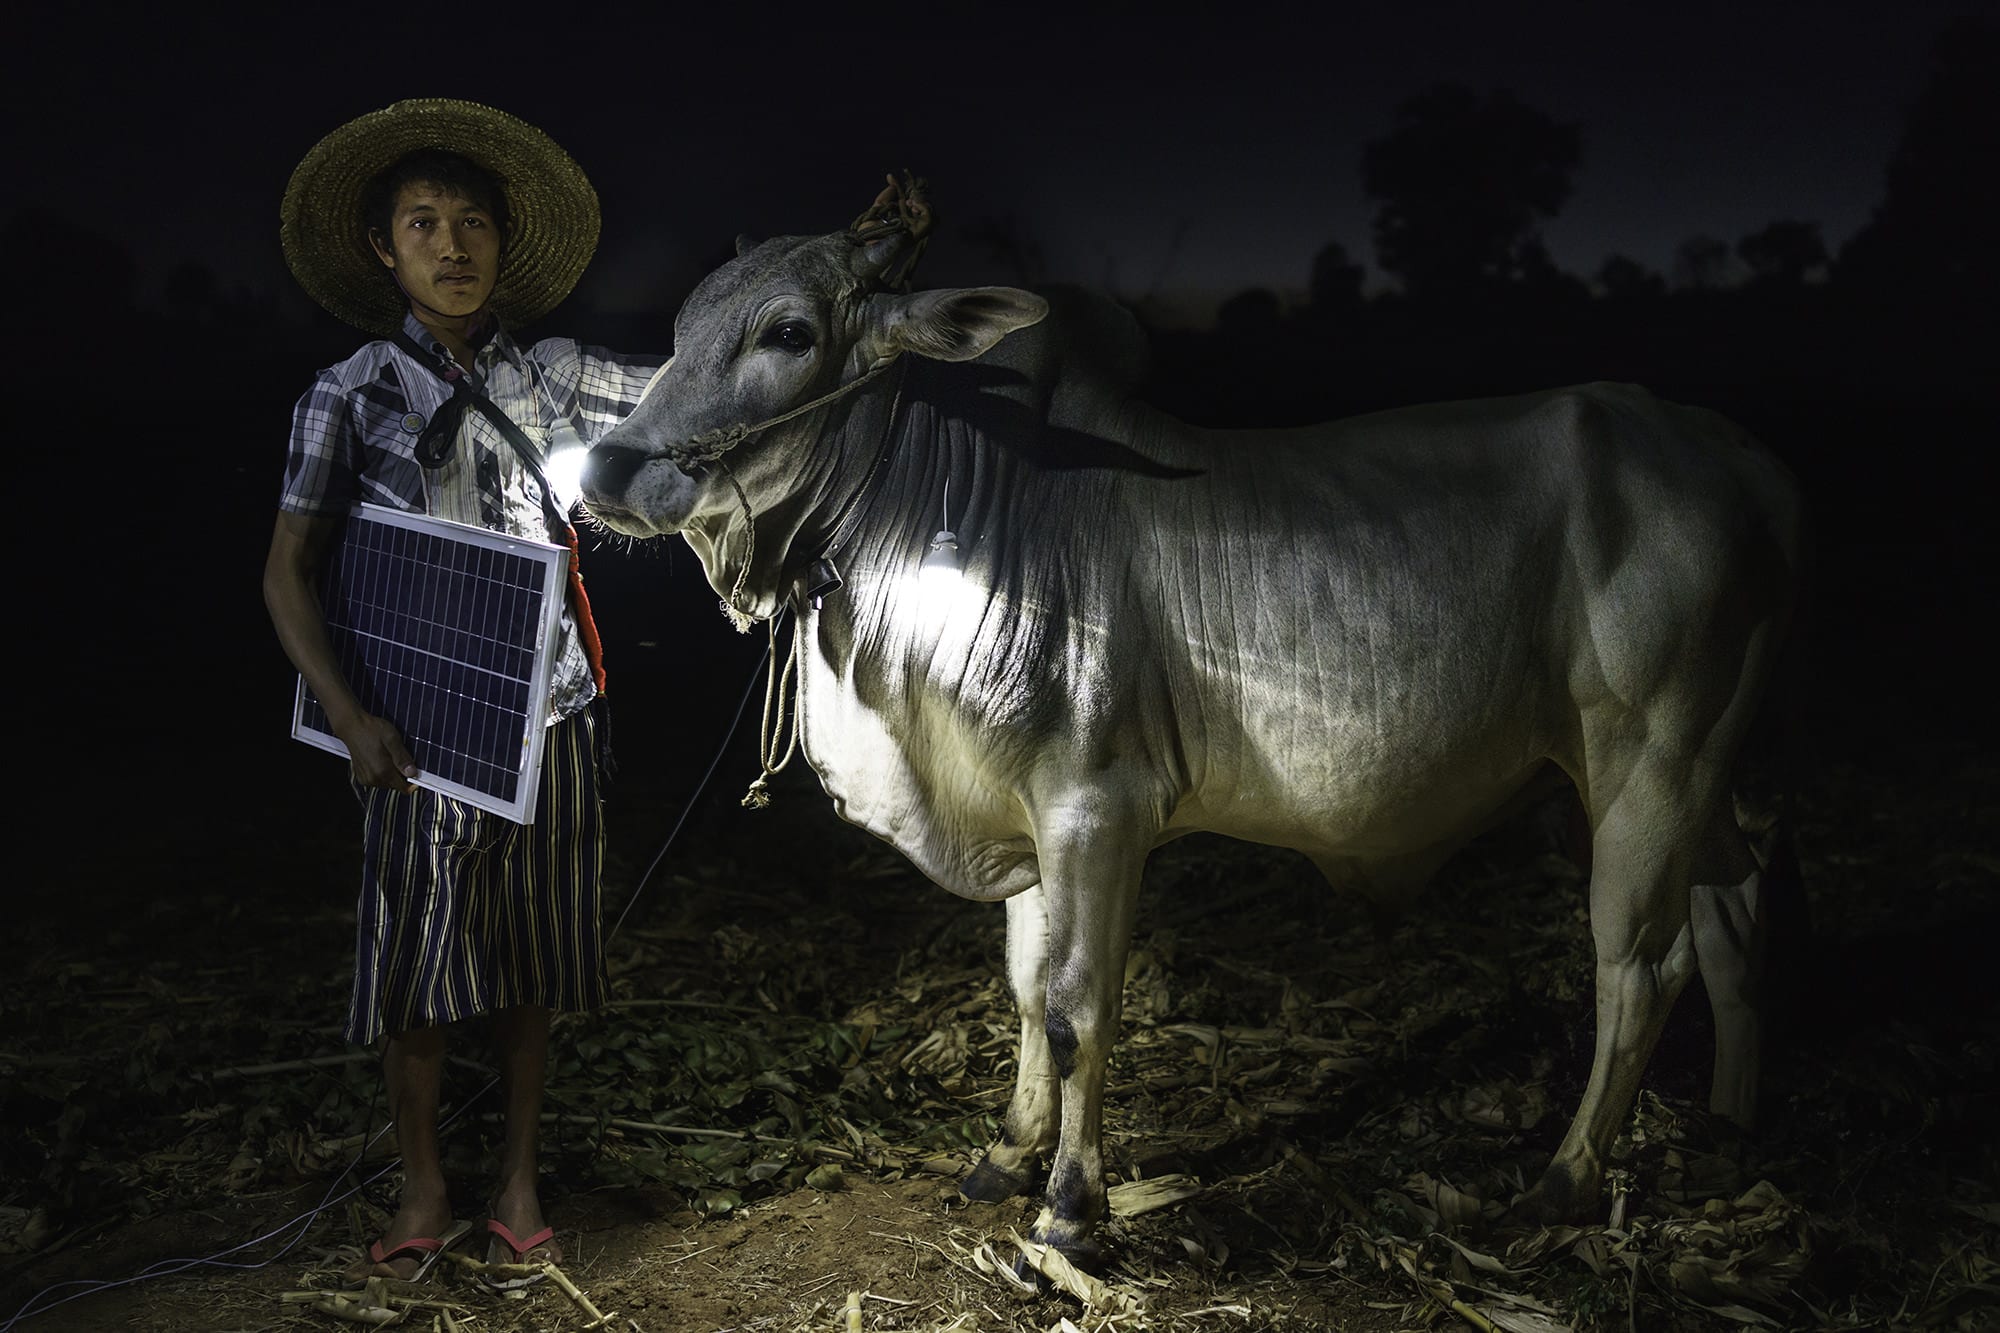 A Shan farmer with his cow.